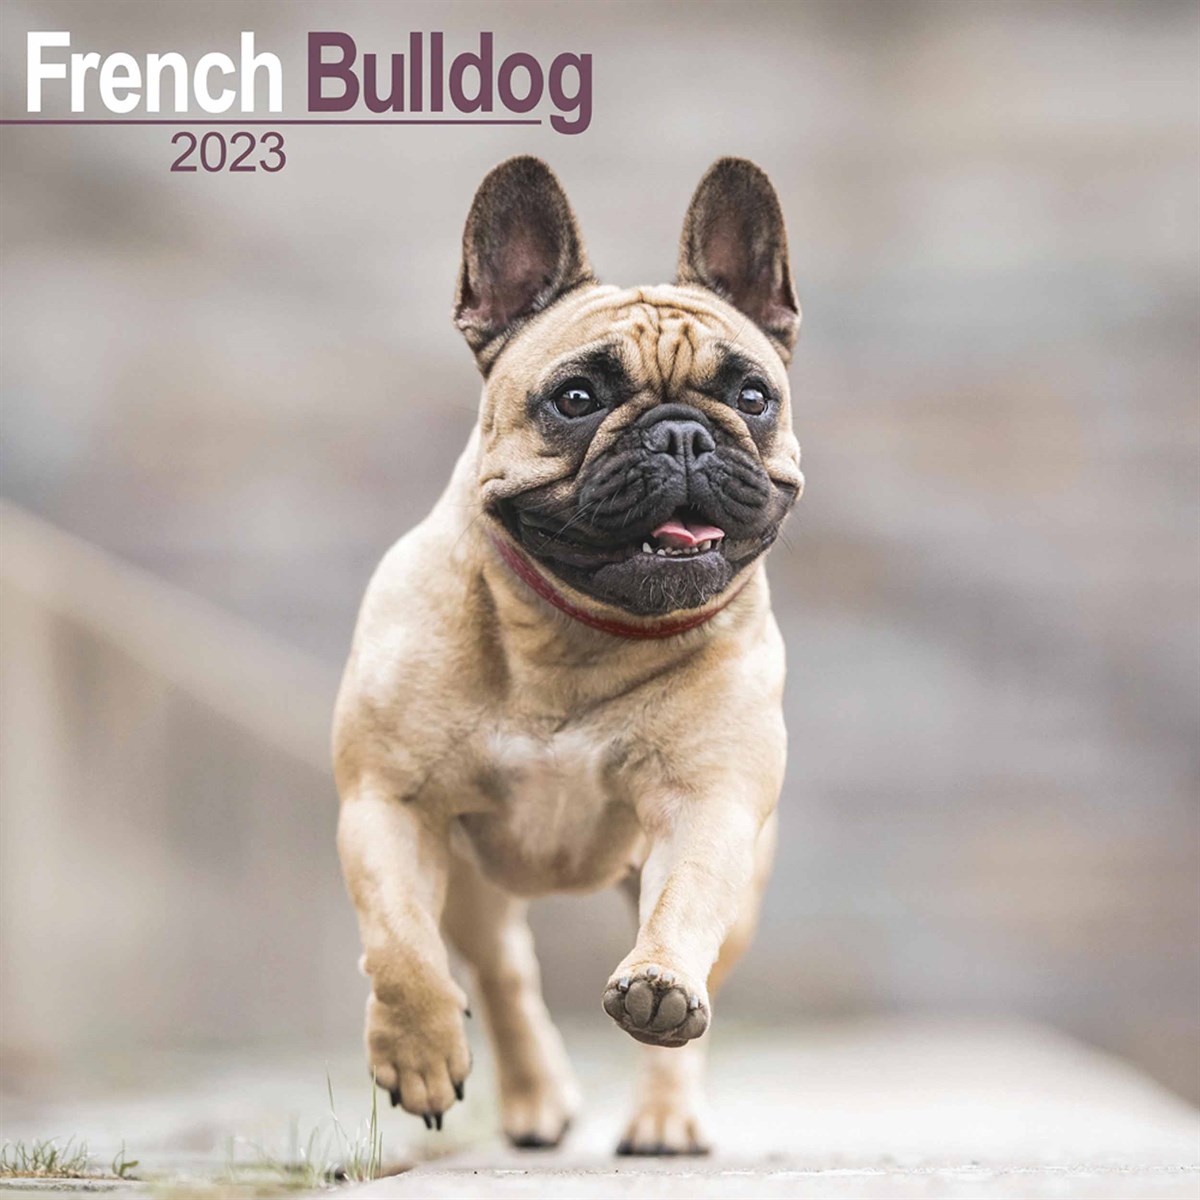 French Bulldog 2023 Calendars